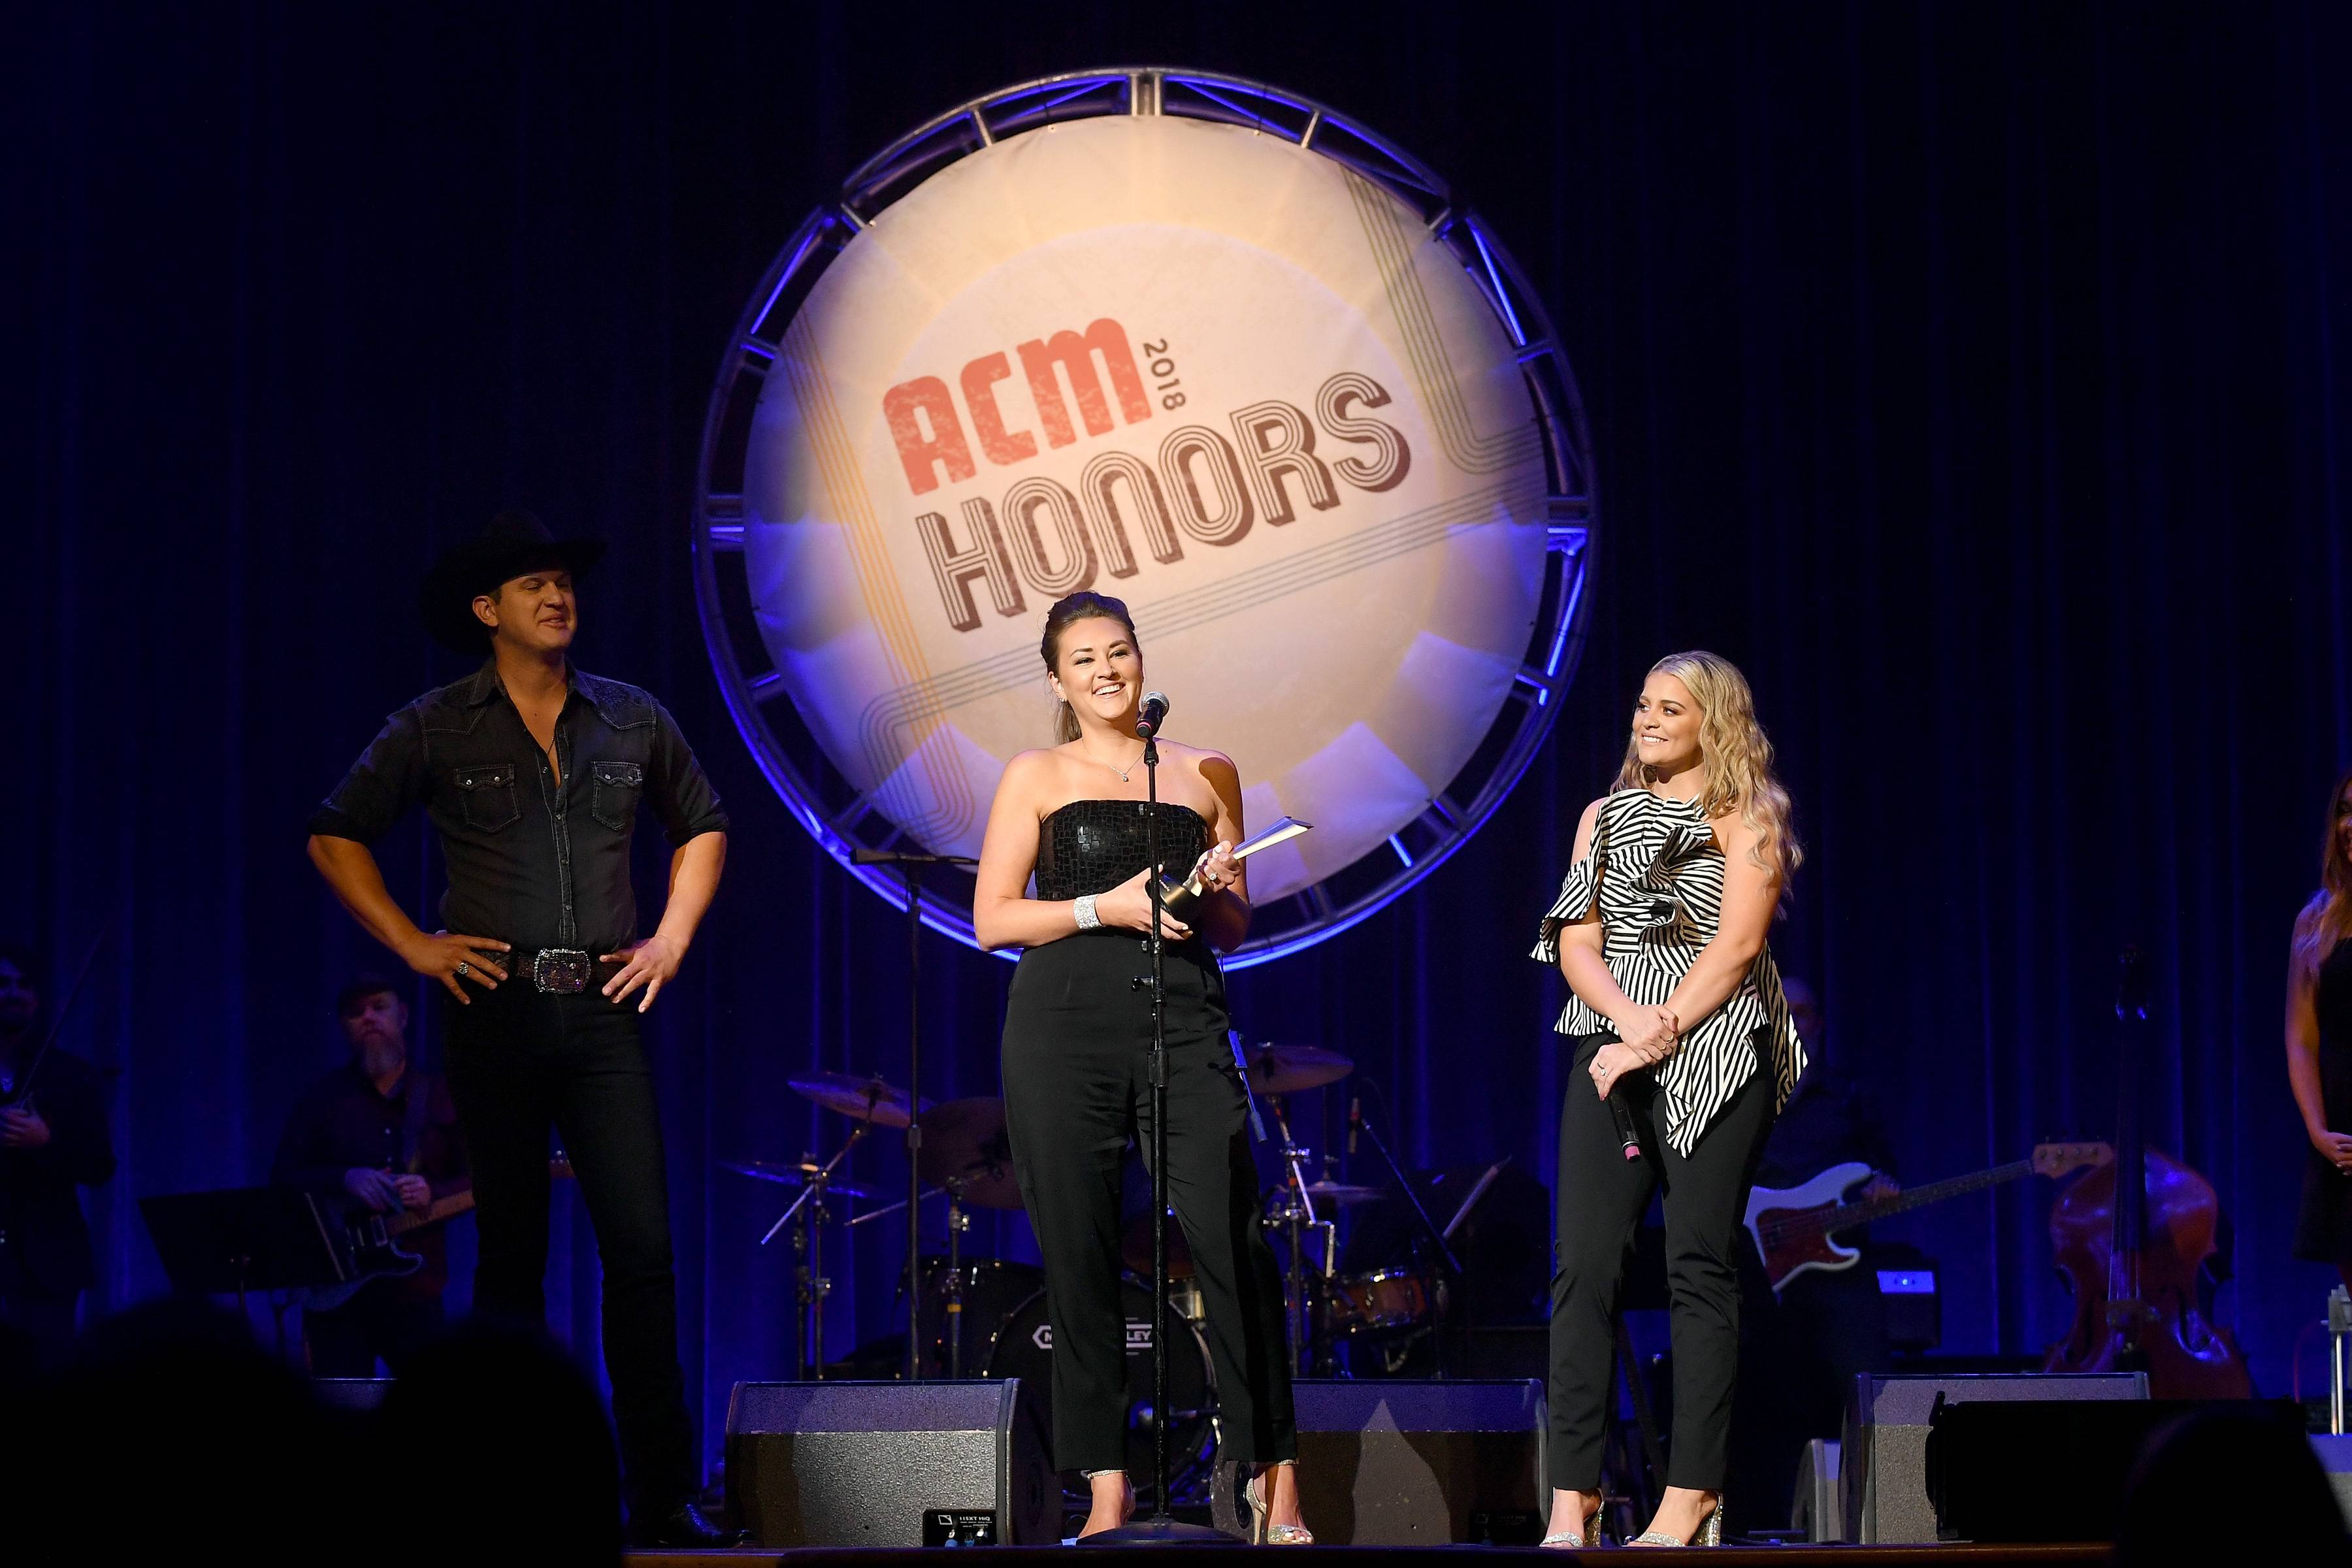 NASHVILLE, TN - AUGUST 22: (L-R) Jon Pardi, Mattie Jackson Selecman and Lauren Alaina speak onstage during the 12th Annual ACM Honors at Ryman Auditorium on August 22, 2018 in Nashville, Tennessee. 